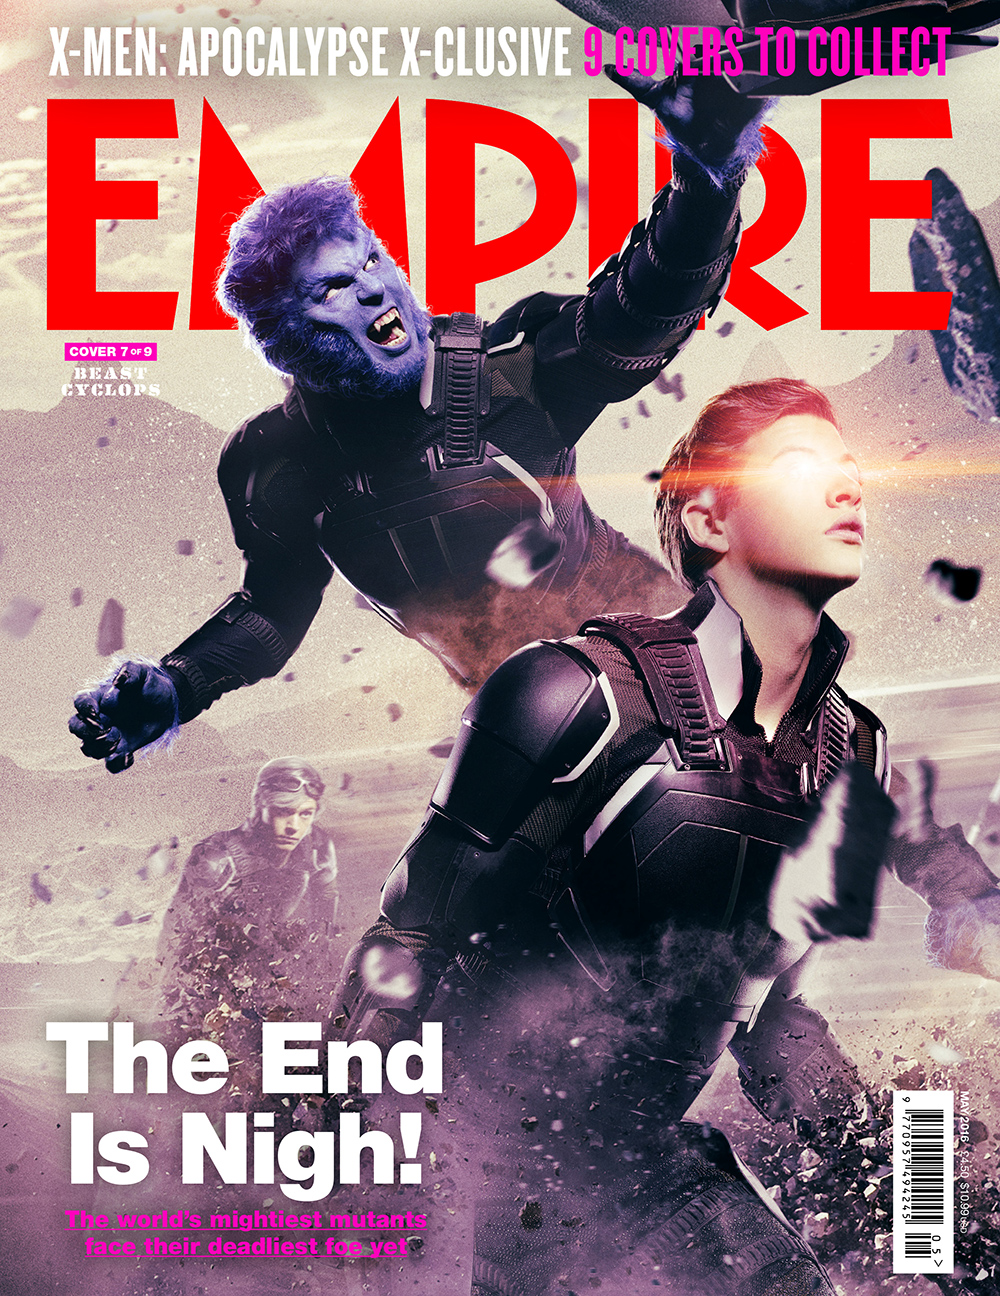 X-Men: Apocalypse empire magazine mystique cover